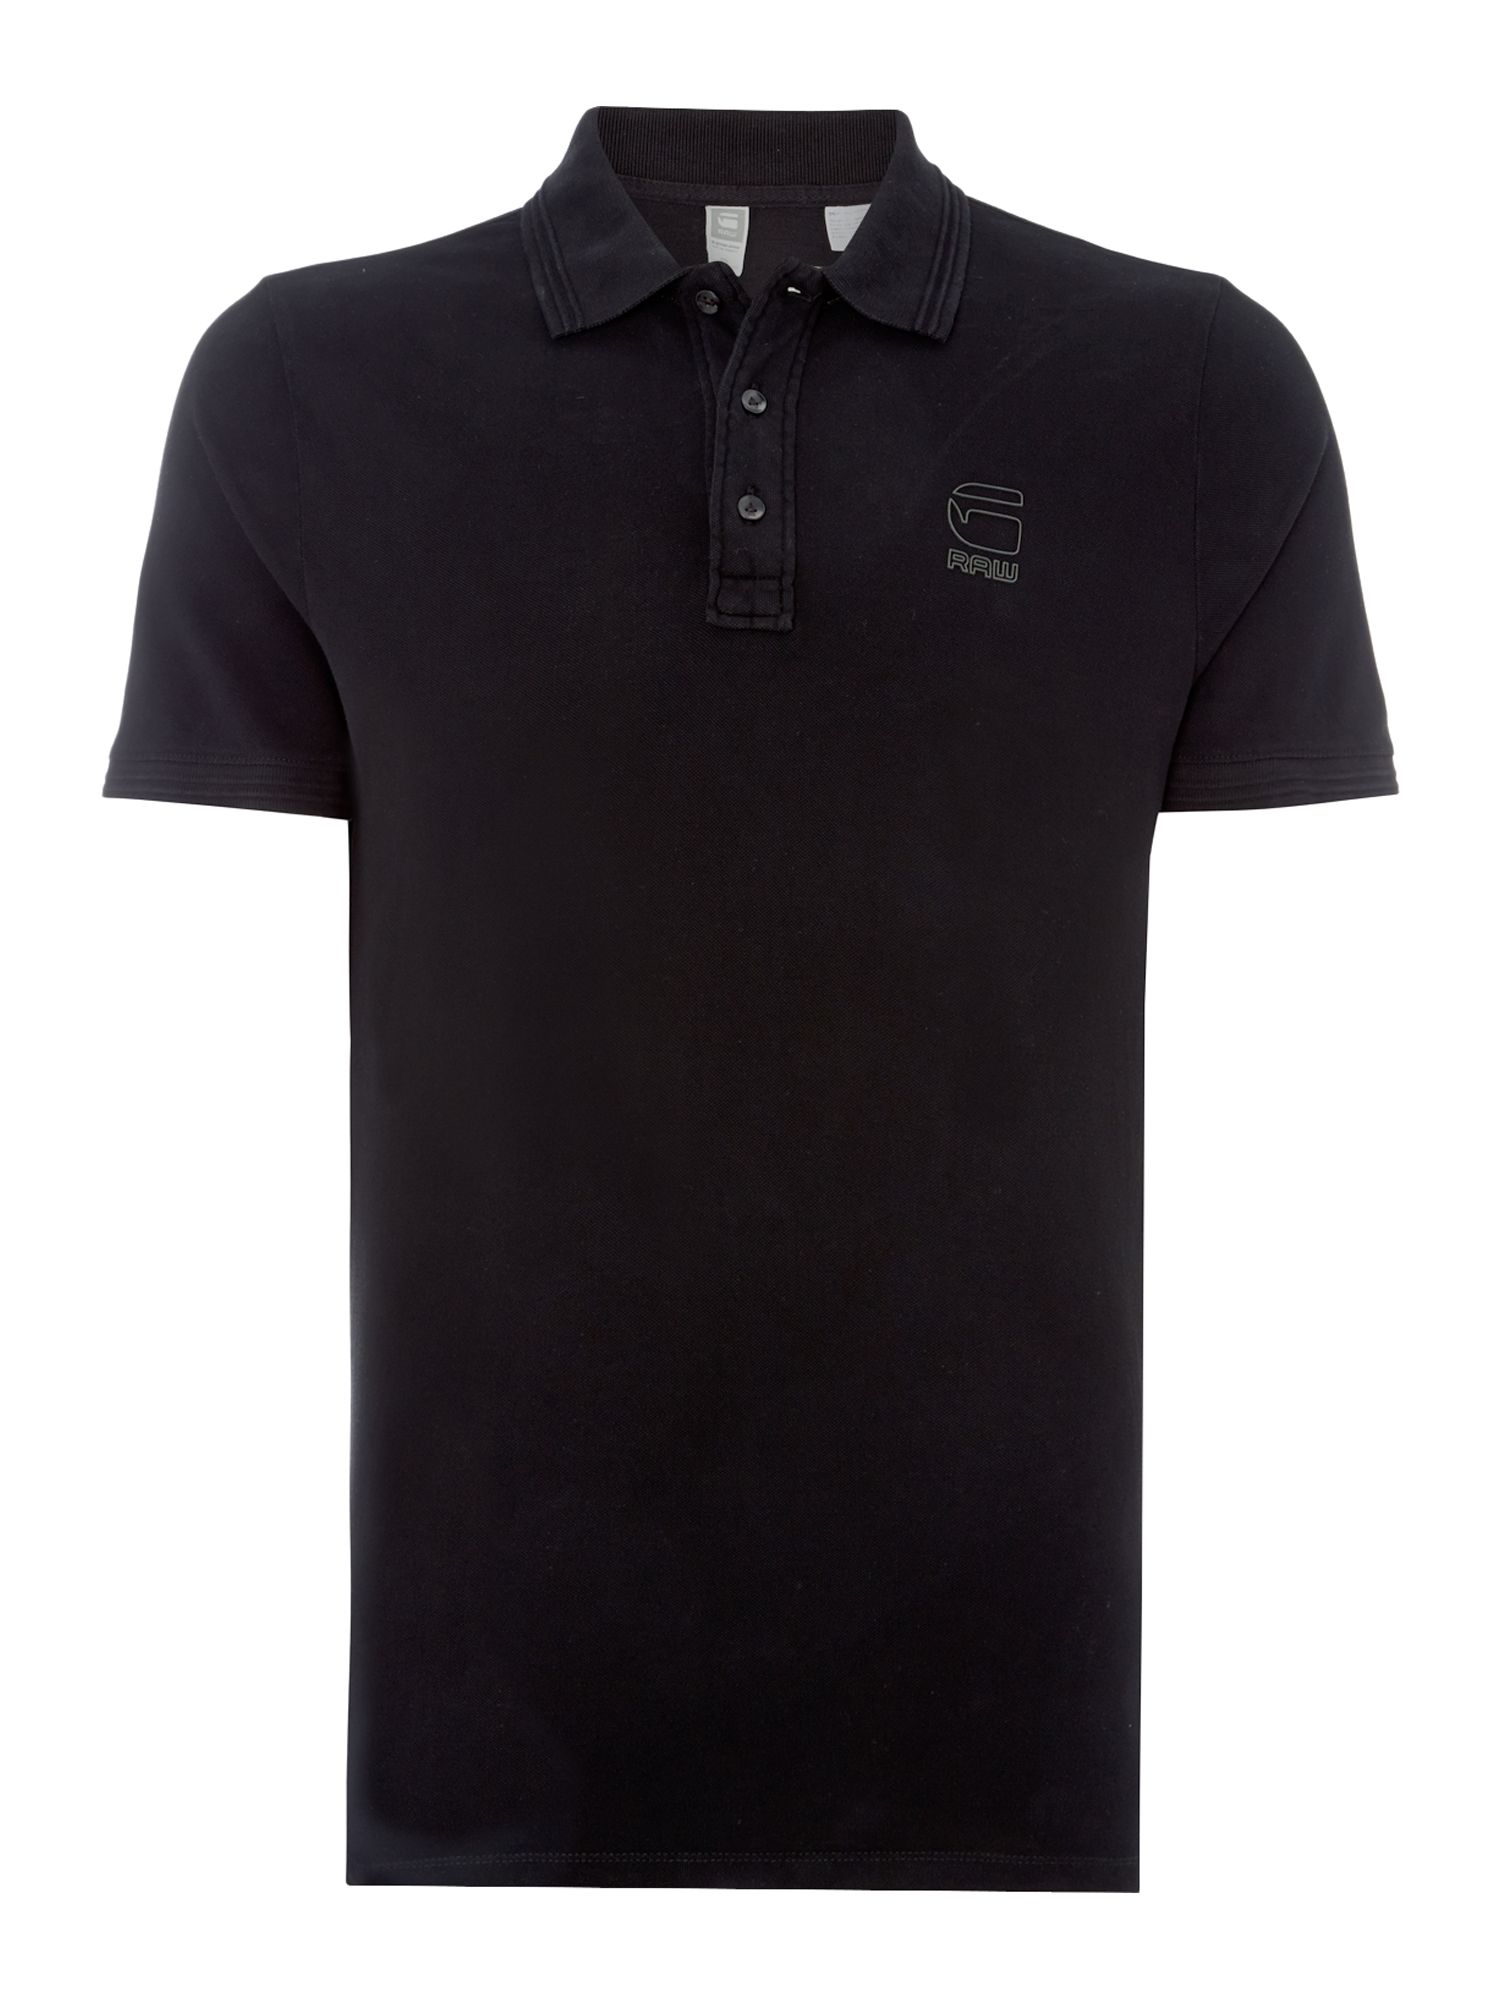 G-star raw Fero Slim Fit Polo Shirt in Black for Men | Lyst